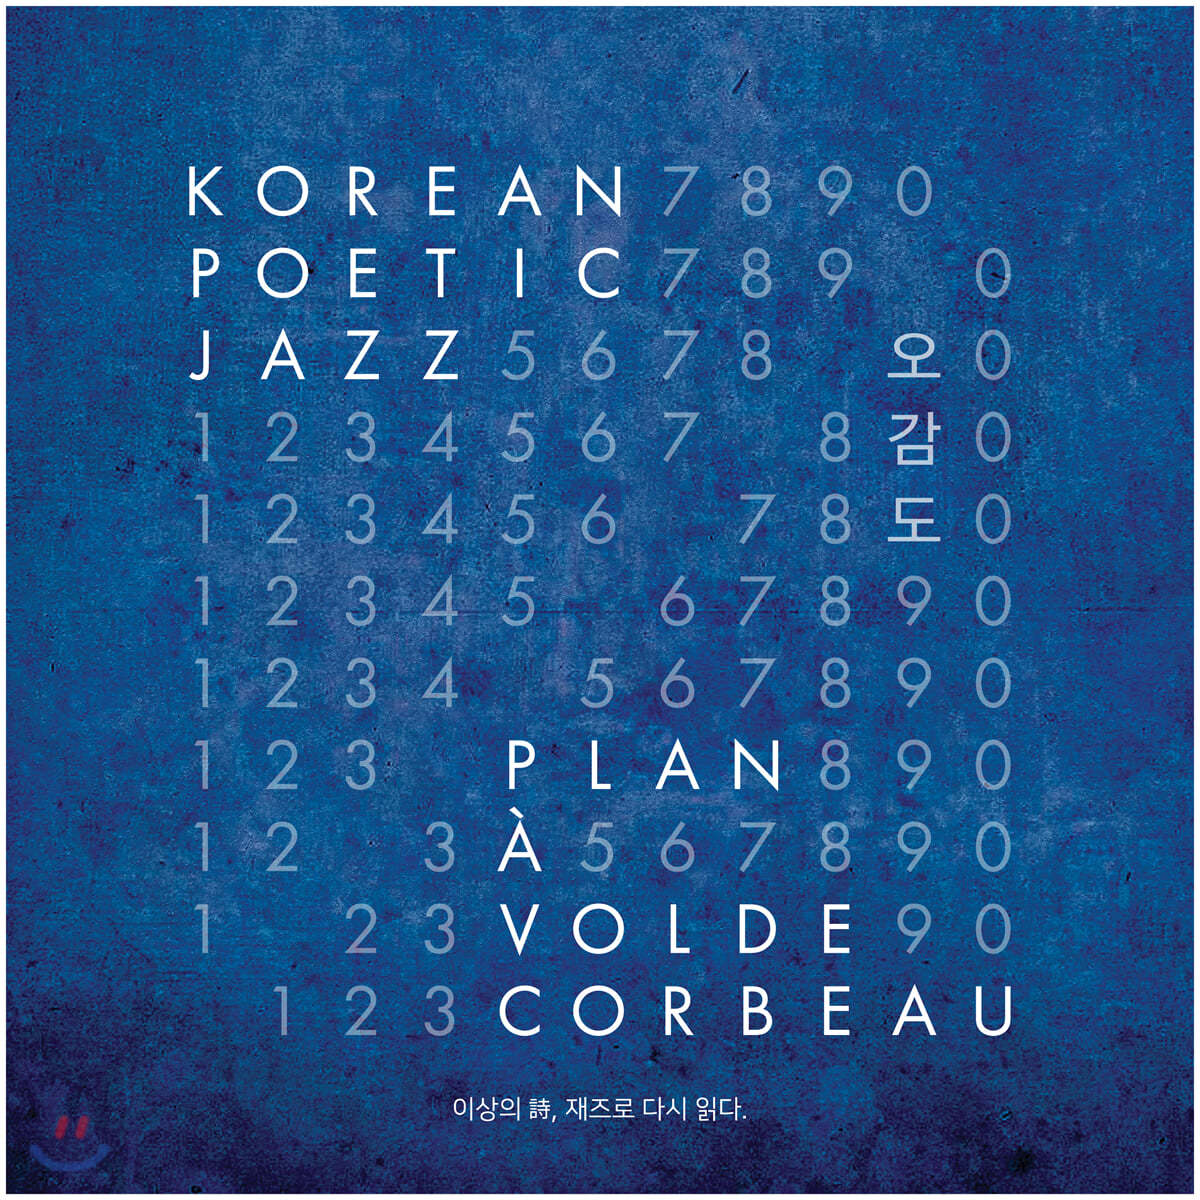 Korean Poetic Jazz - 오감도 (PLAN A VOLDE CORBEAU)